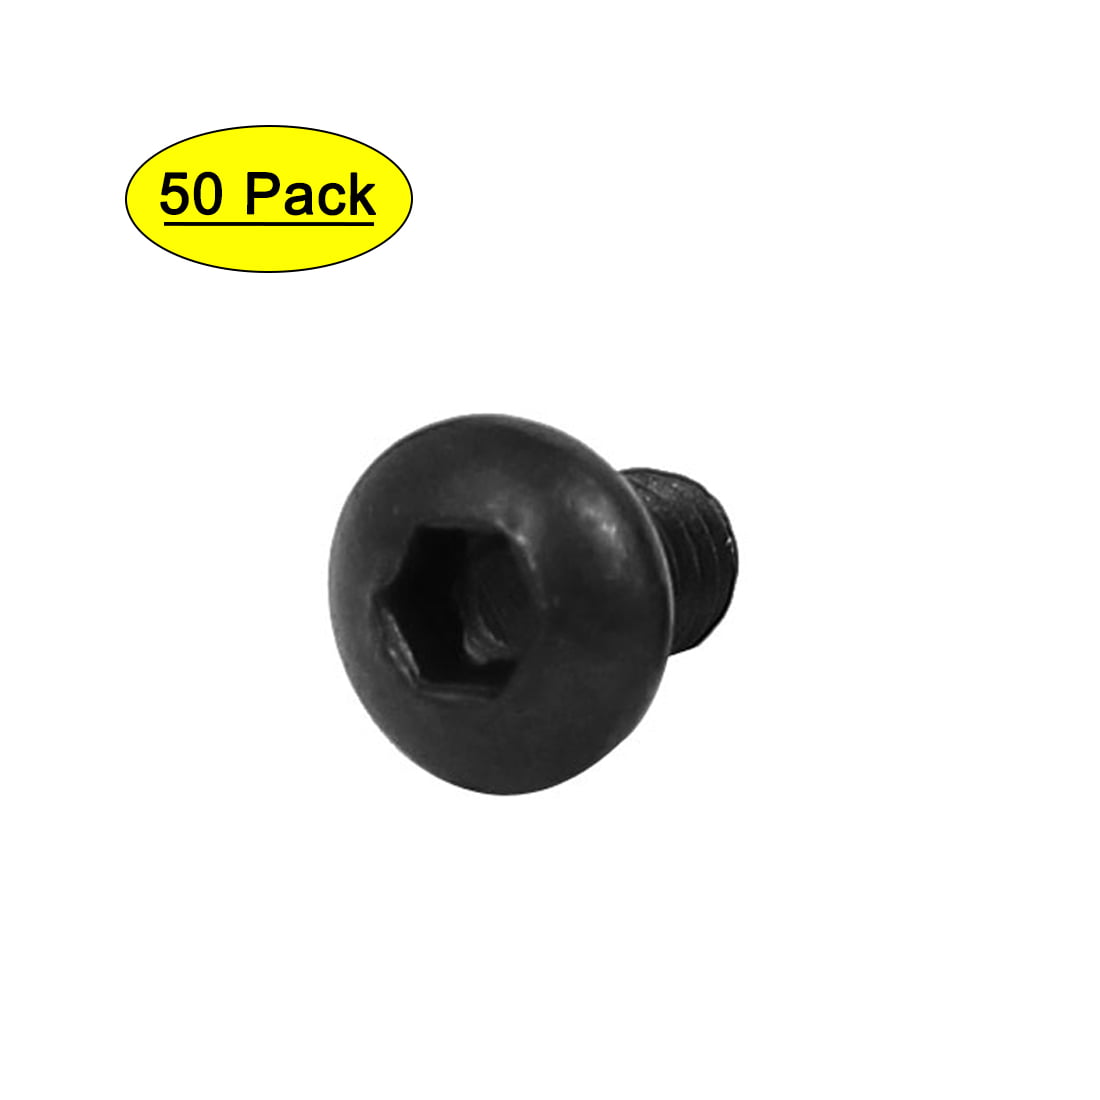 M2x3mm Metal Grade 10.9 Button Head Hex Socket Cap Screw Bolt Fastener 50pcs 